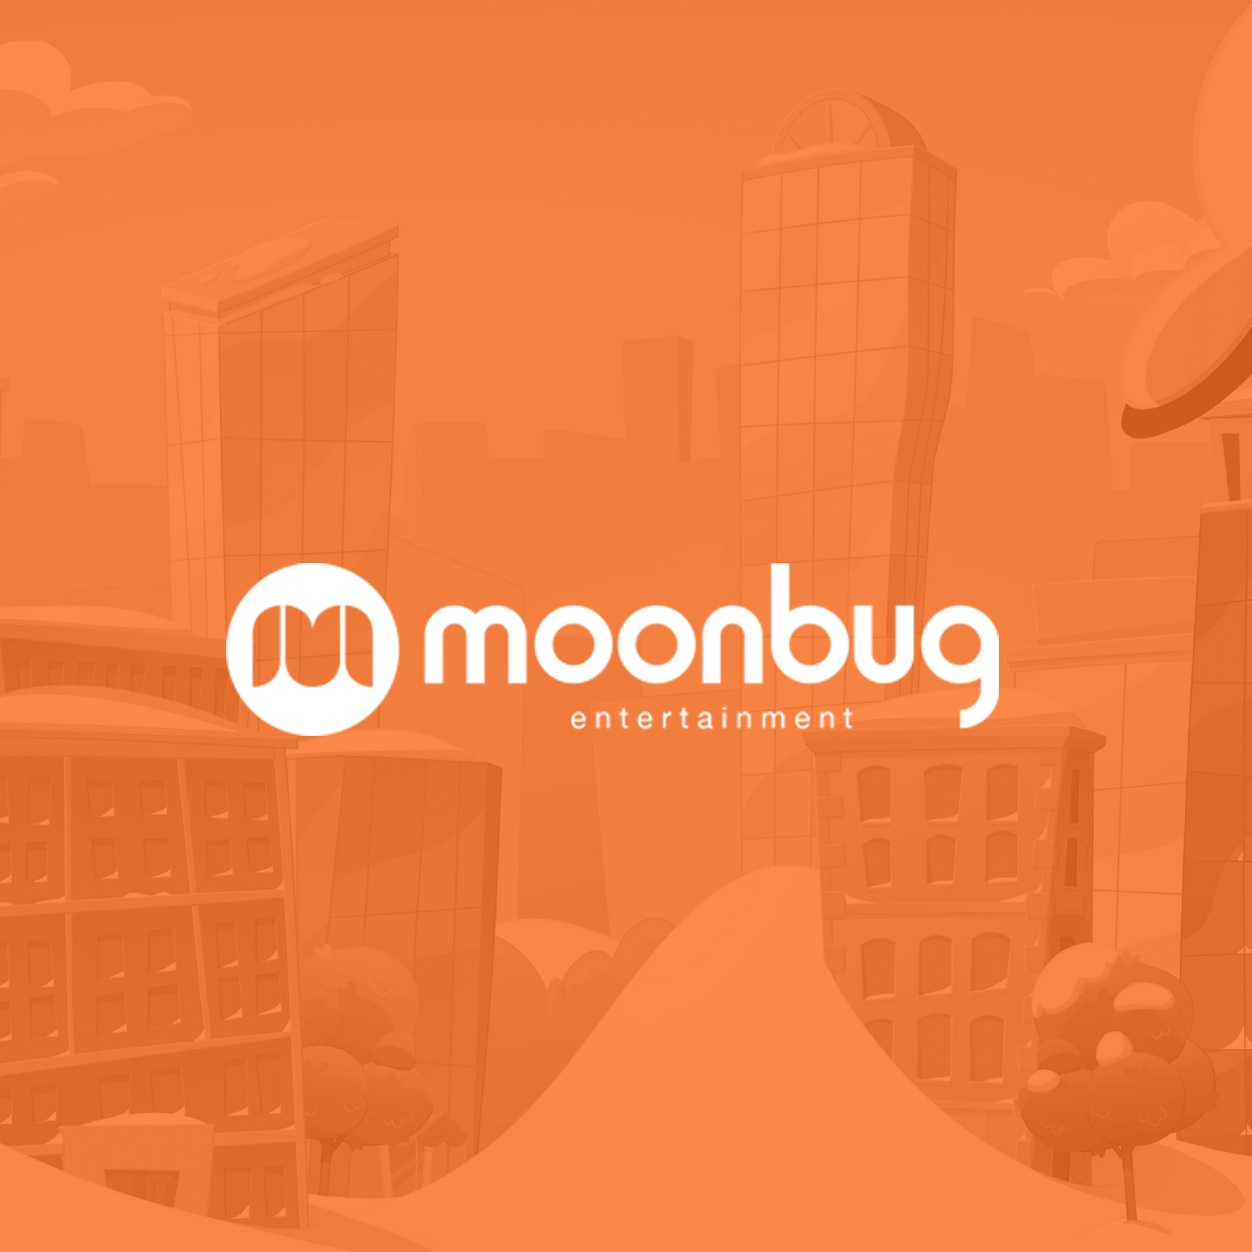 moonbug.jpg